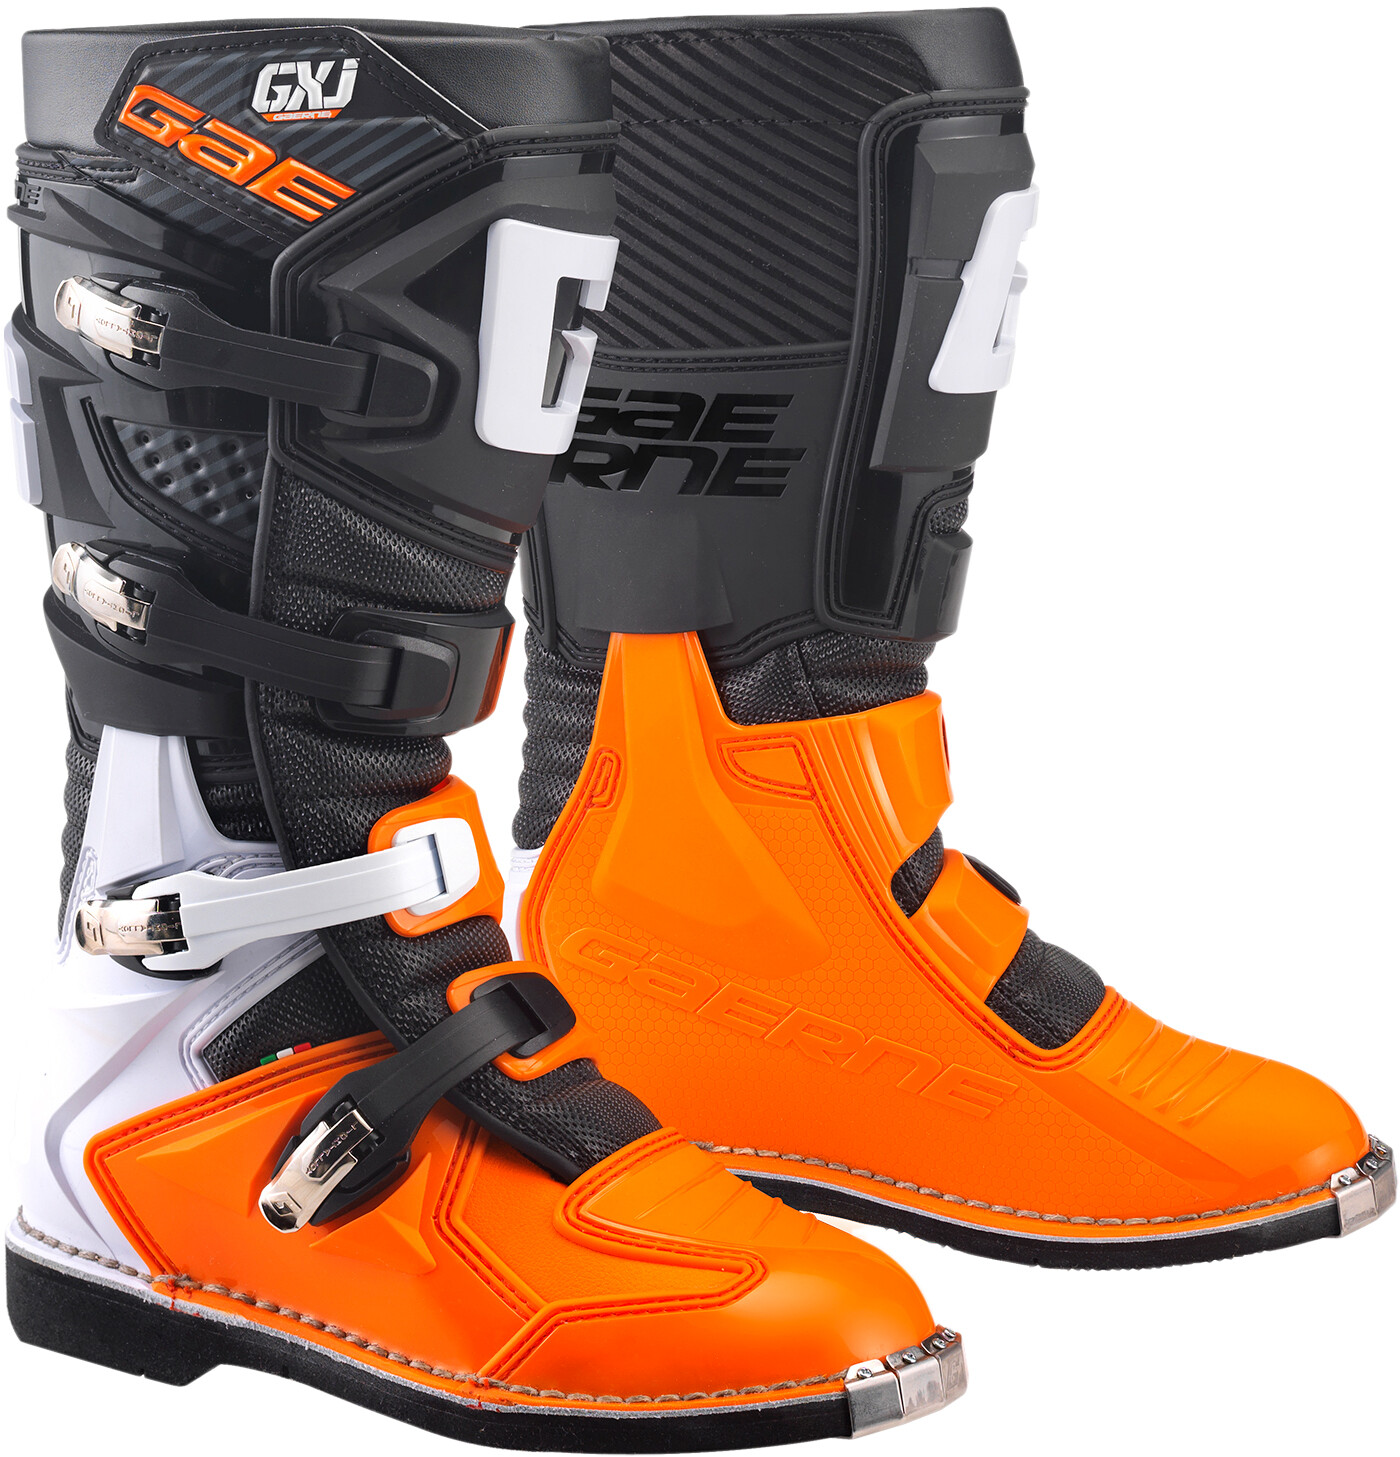 Gaerne GX-J Youth Boots (4, Black/Orange) - image 1 of 1